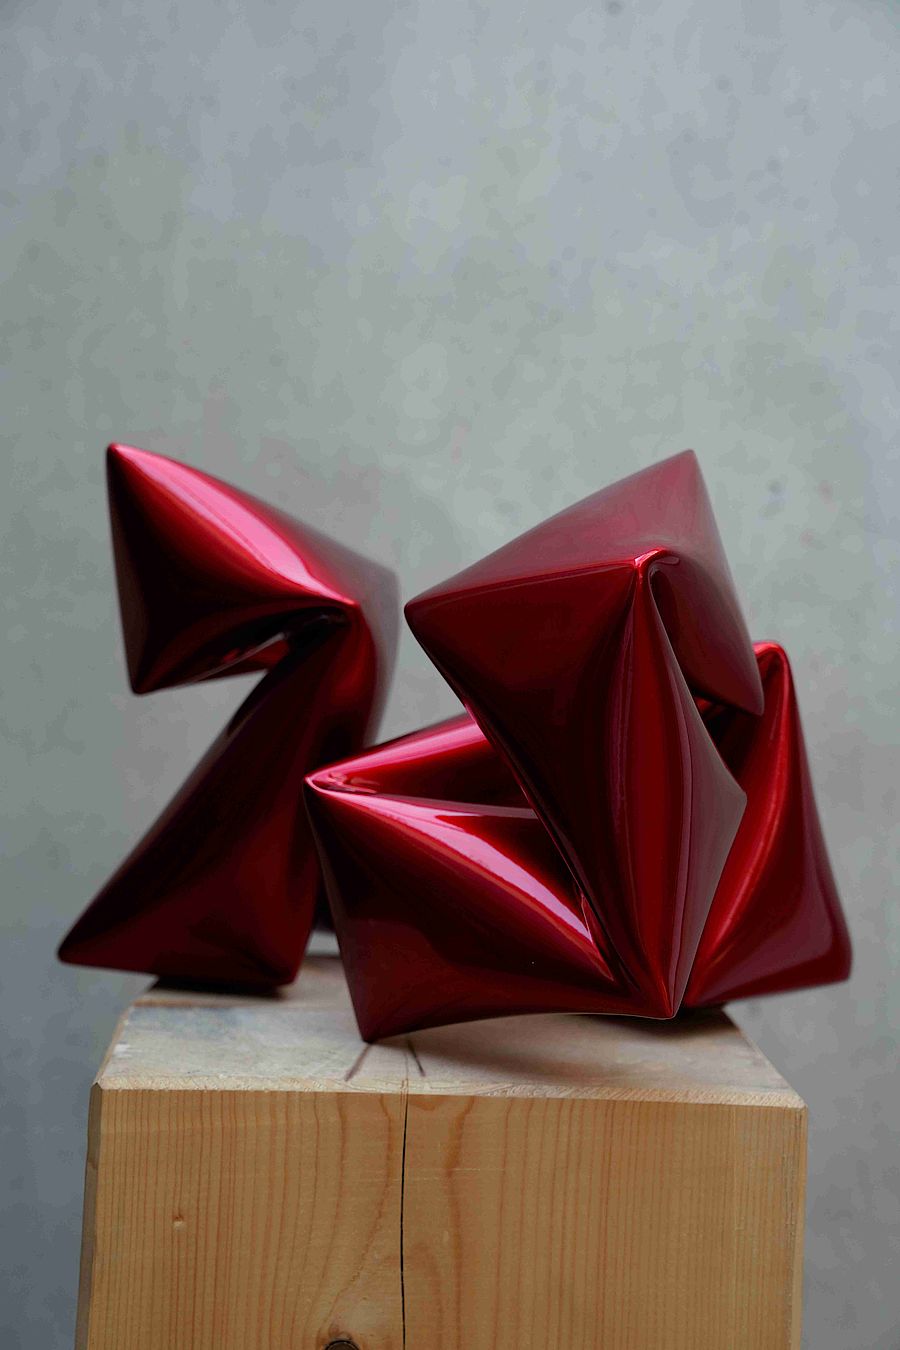 Korff Stiftung - Willi Siber - Sculptures - Steelsculpture red